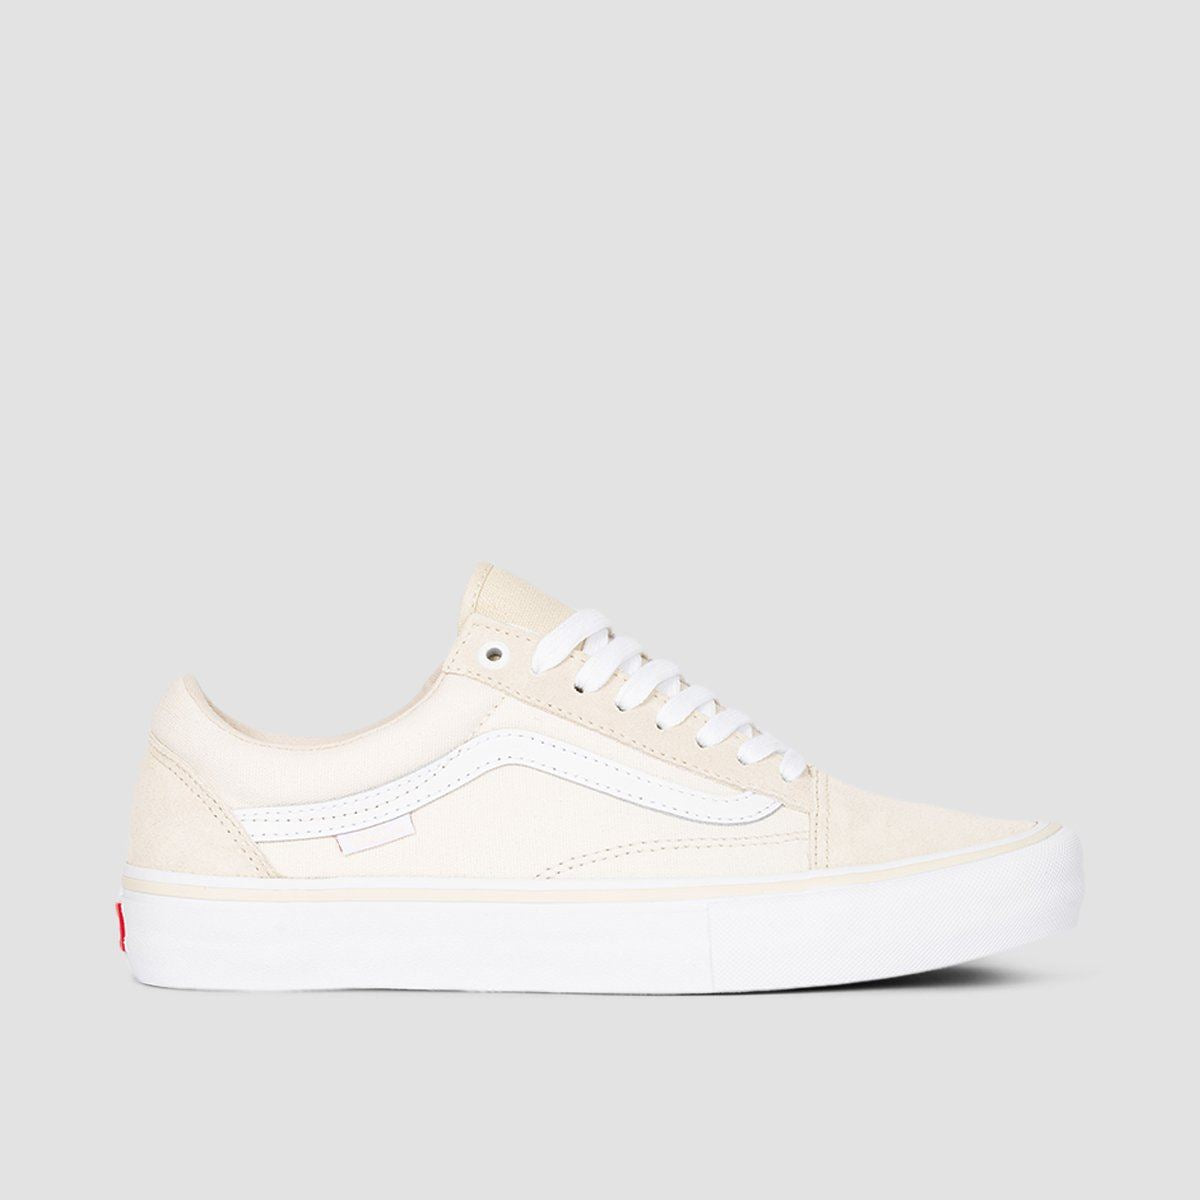 Vans Old Skool Pro Shoes - Marshmallow/White